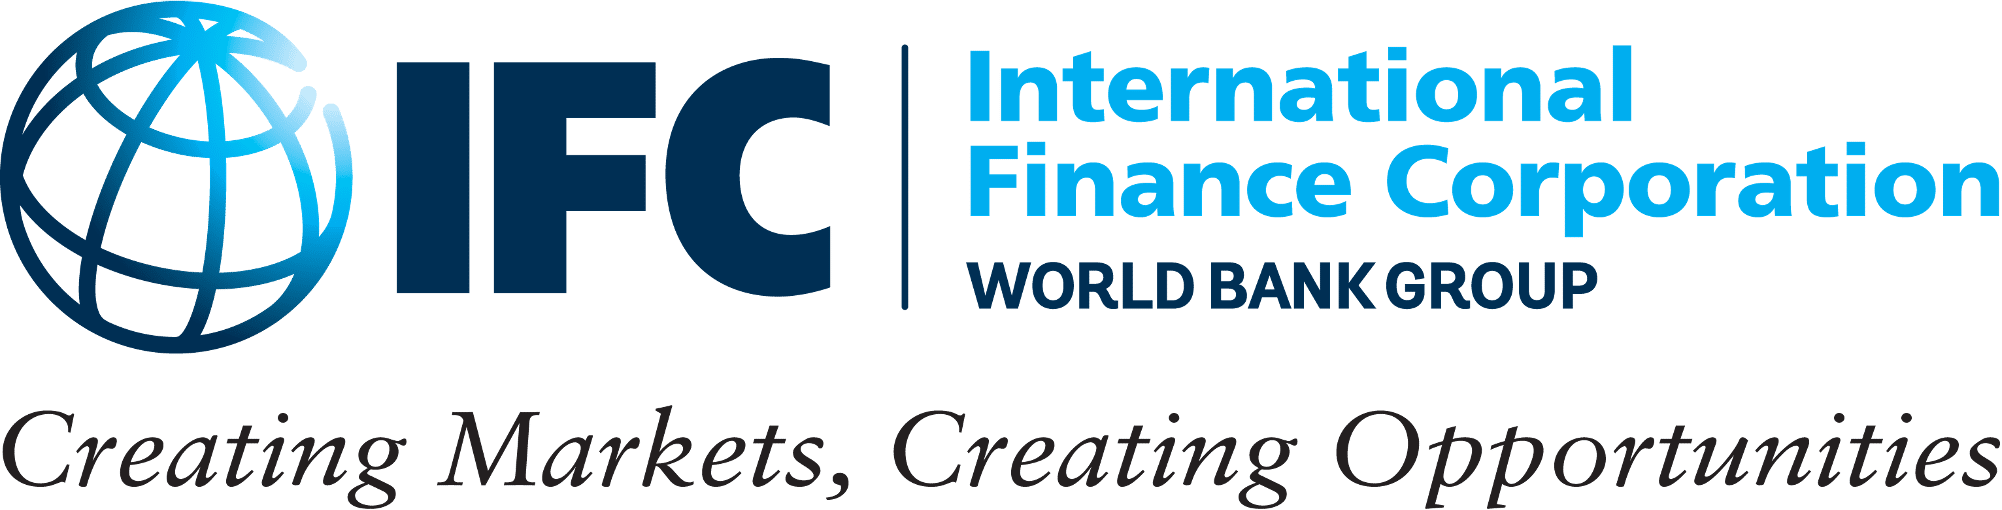 IFC-Logo